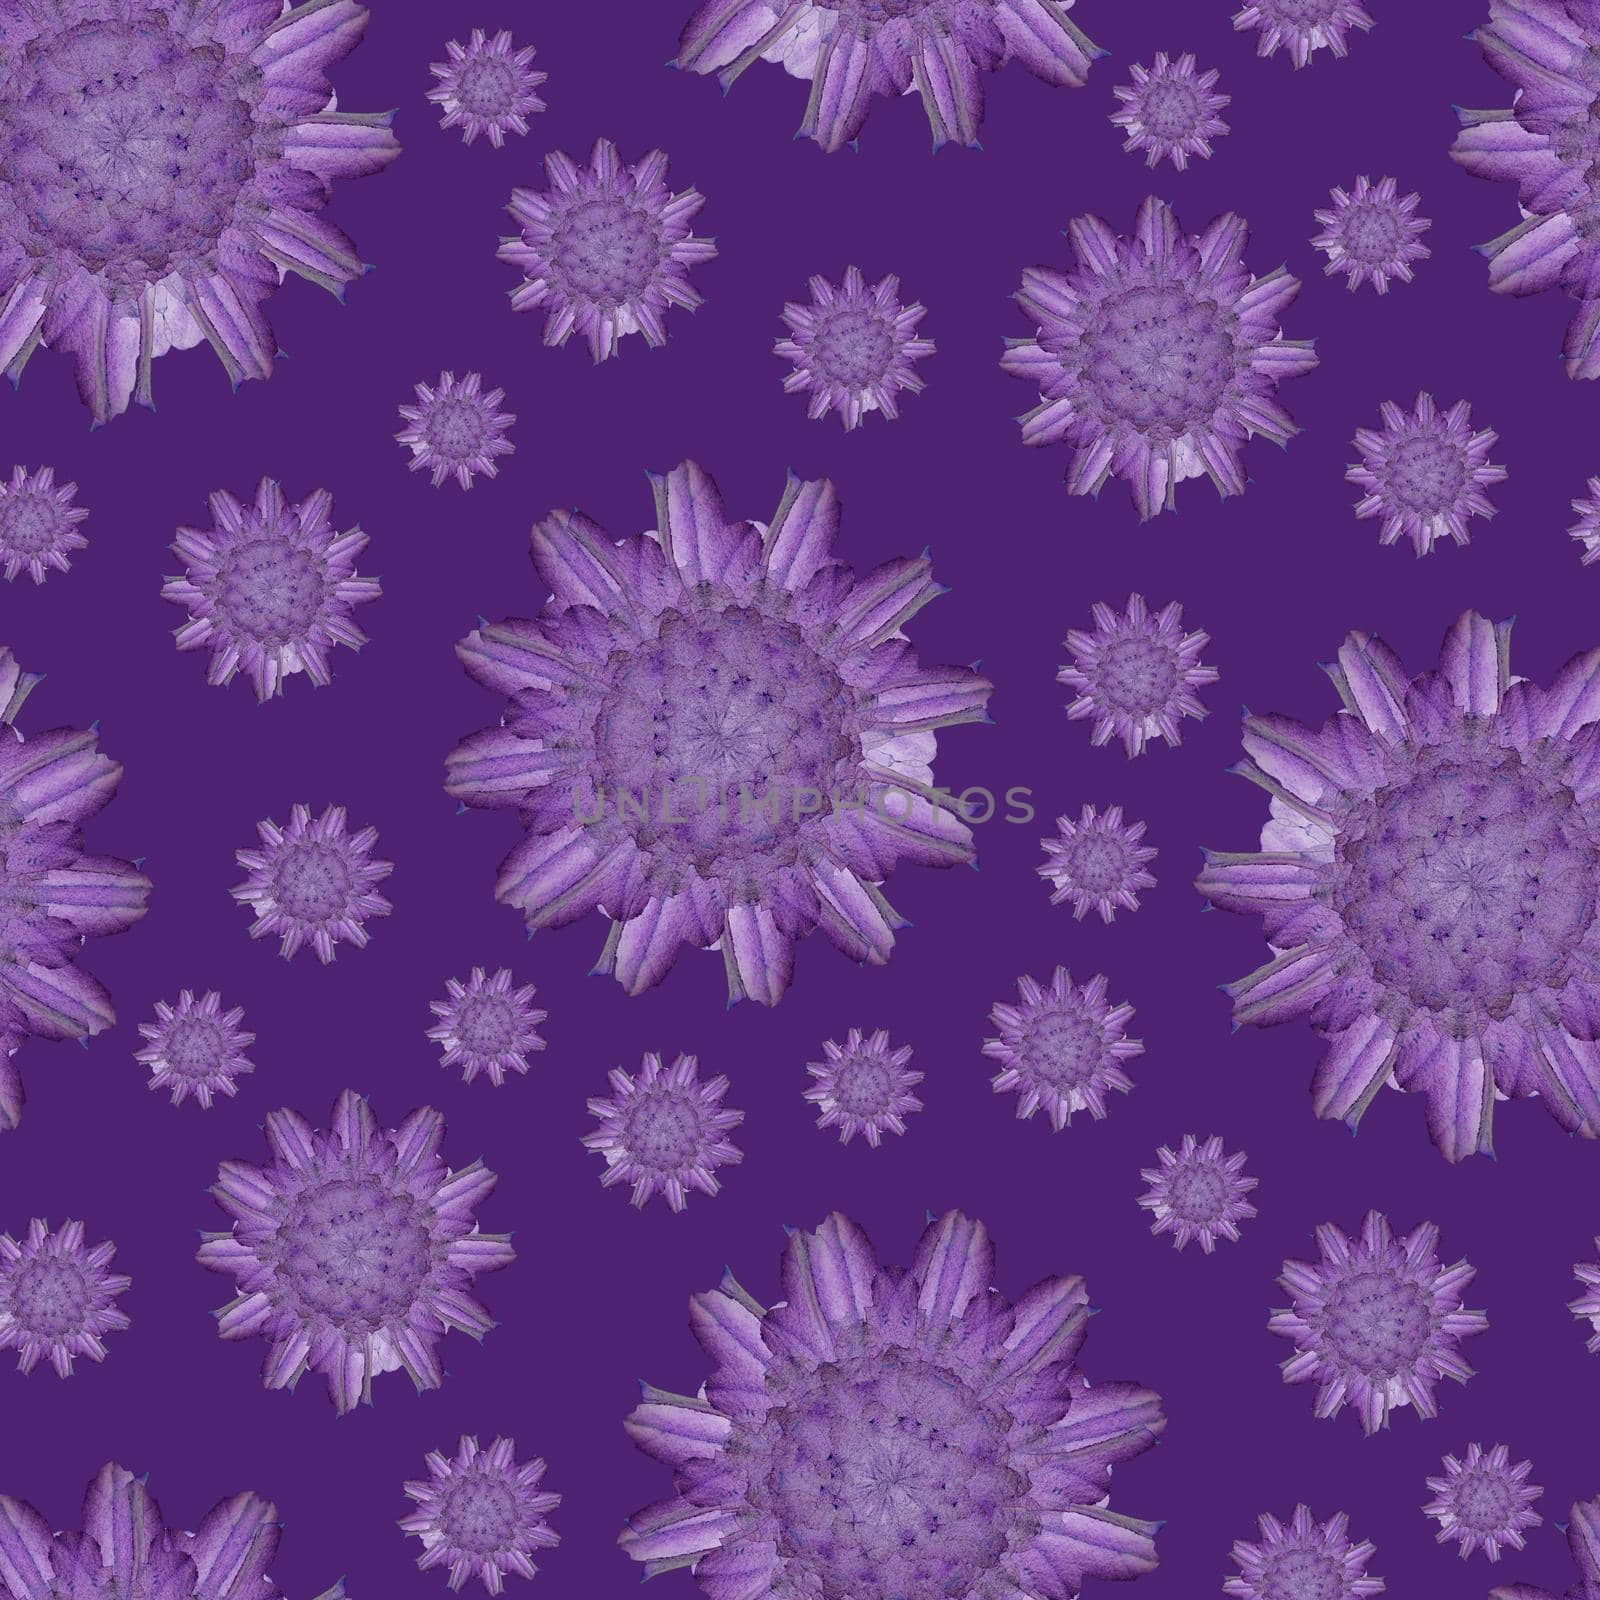 Floral Repeat Pattern. Violet Flower on Purple Background. by Rina_Dozornaya